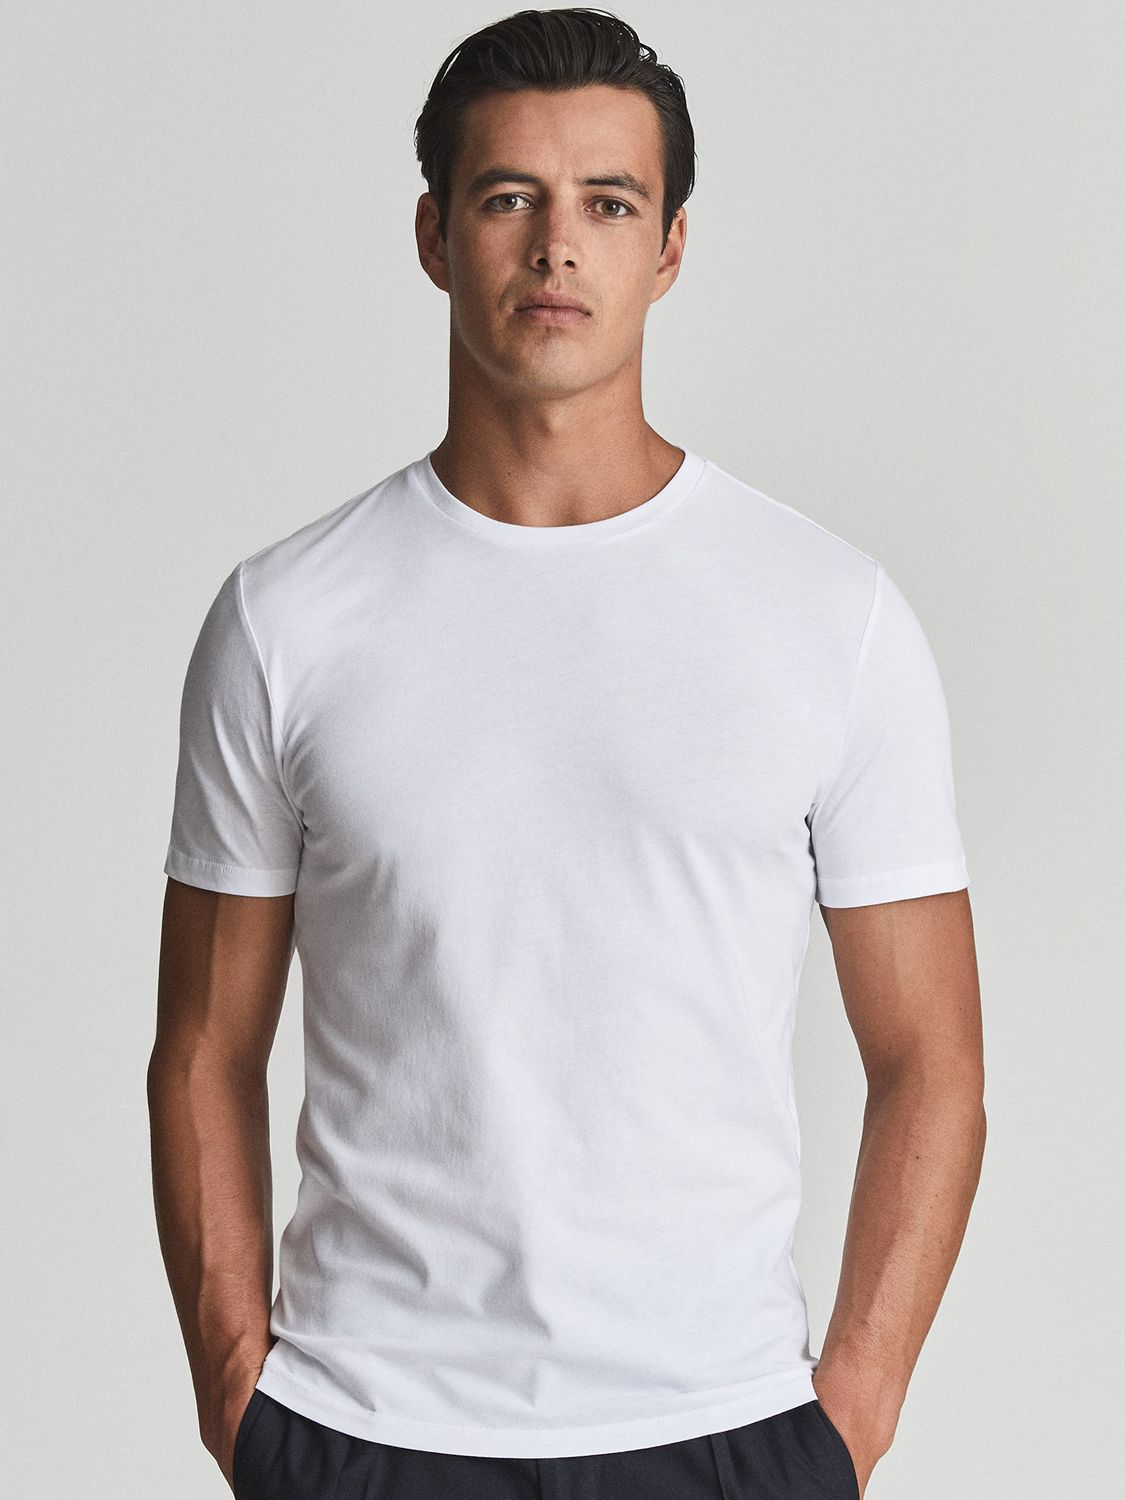 Reiss Bless Crew Neck T-Shirt, White, XS